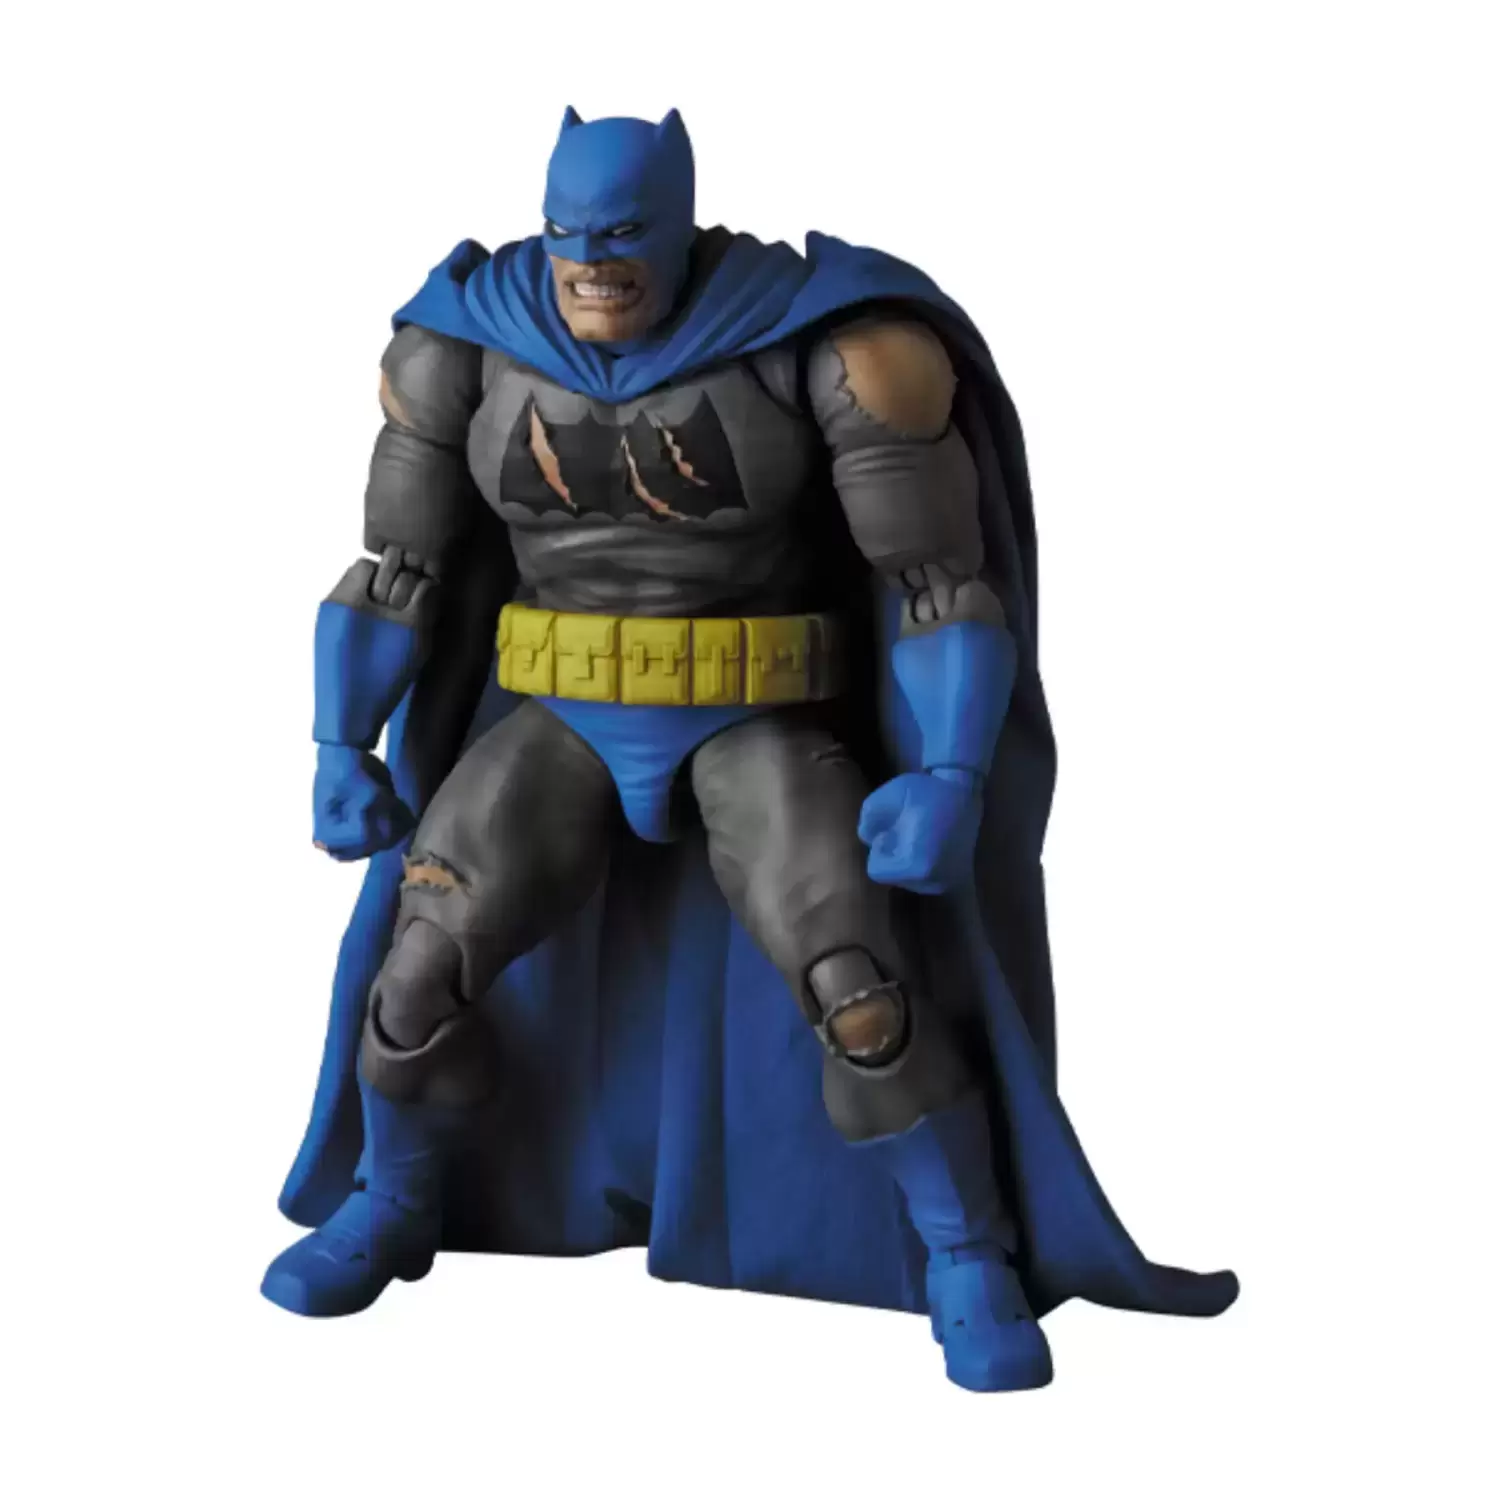 MAFEX (Medicom Toy) - Triumphant Batman - The Dark Knight Returns